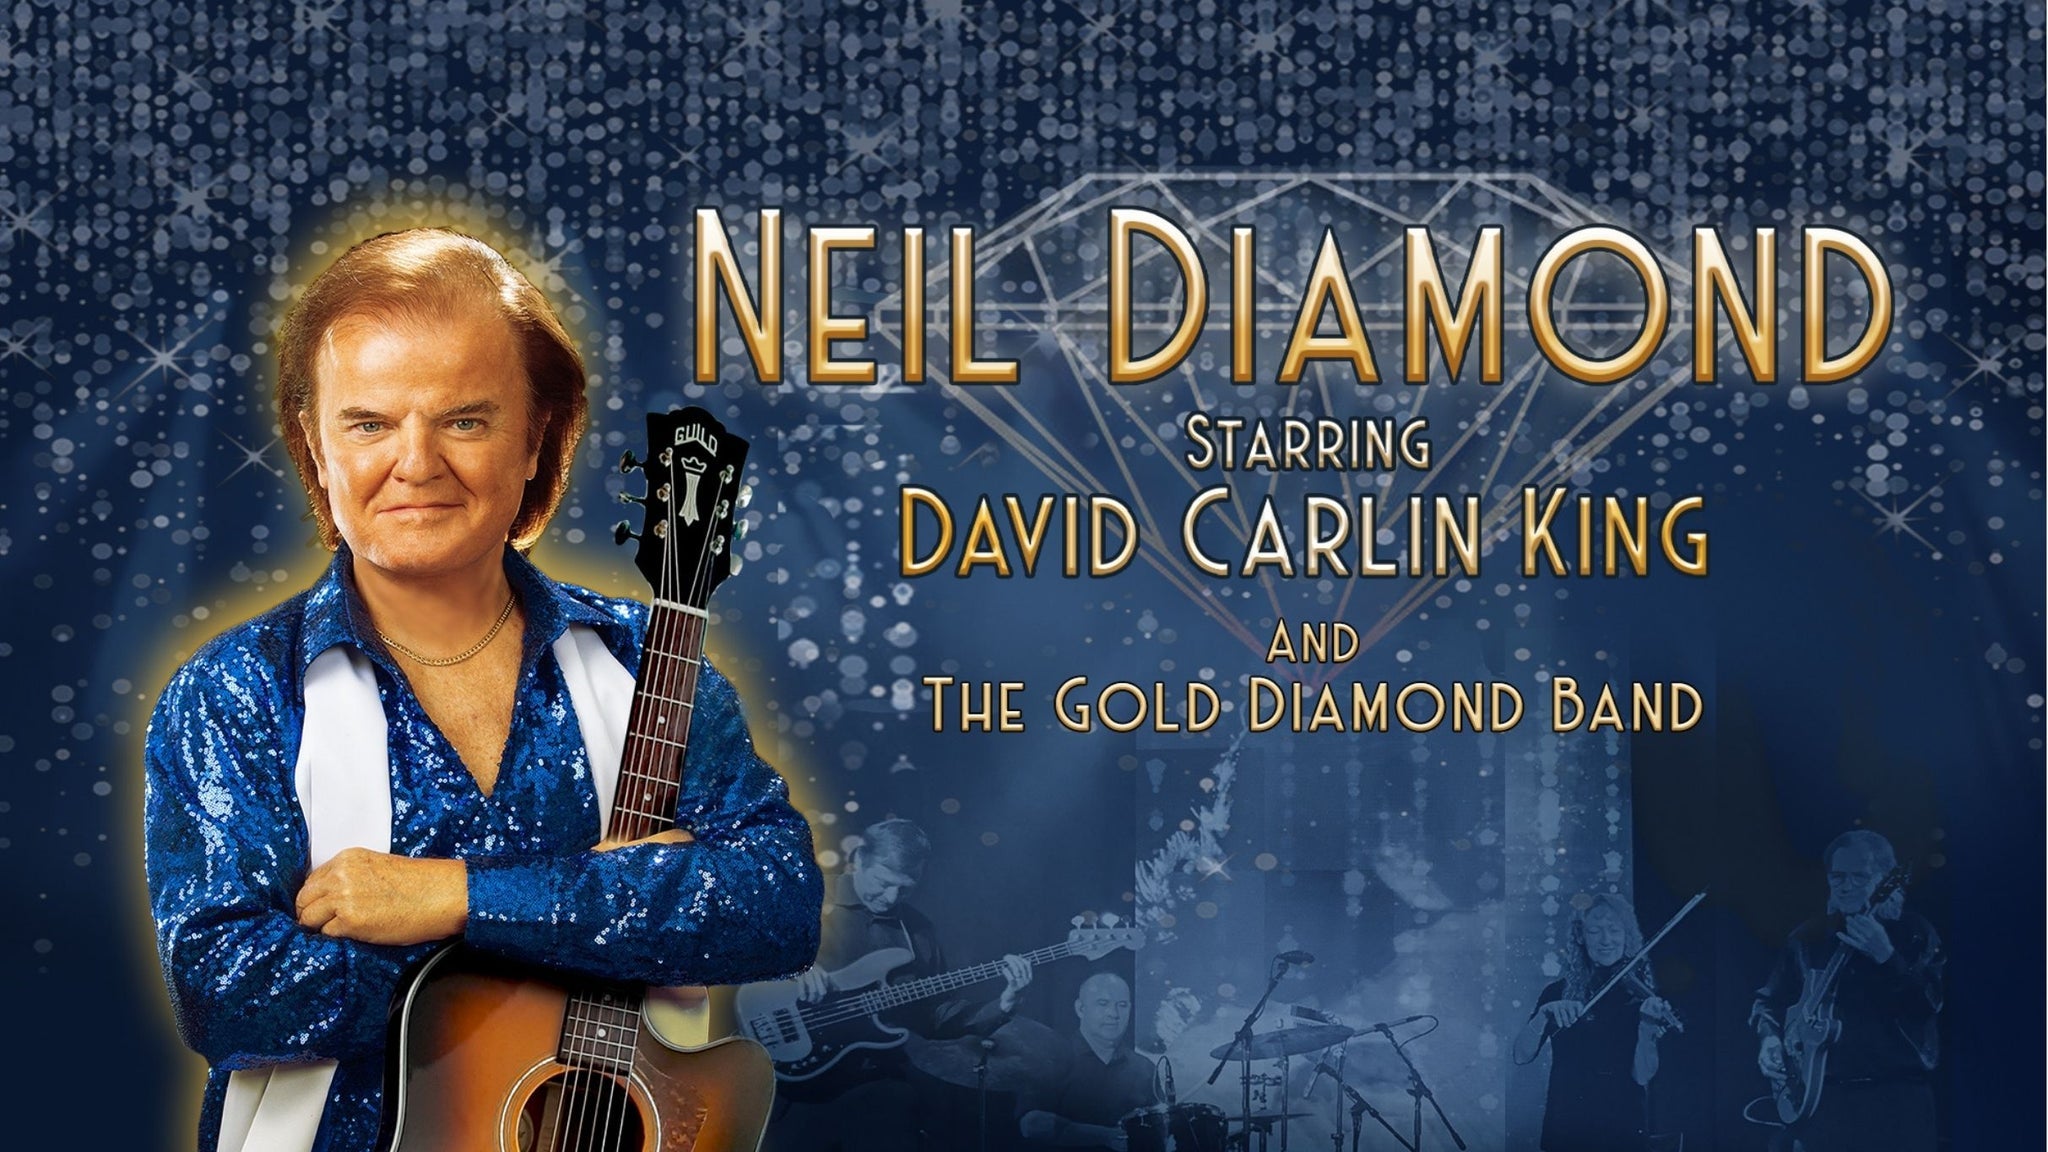 Neil Diamond Tribute starring David Carlin King